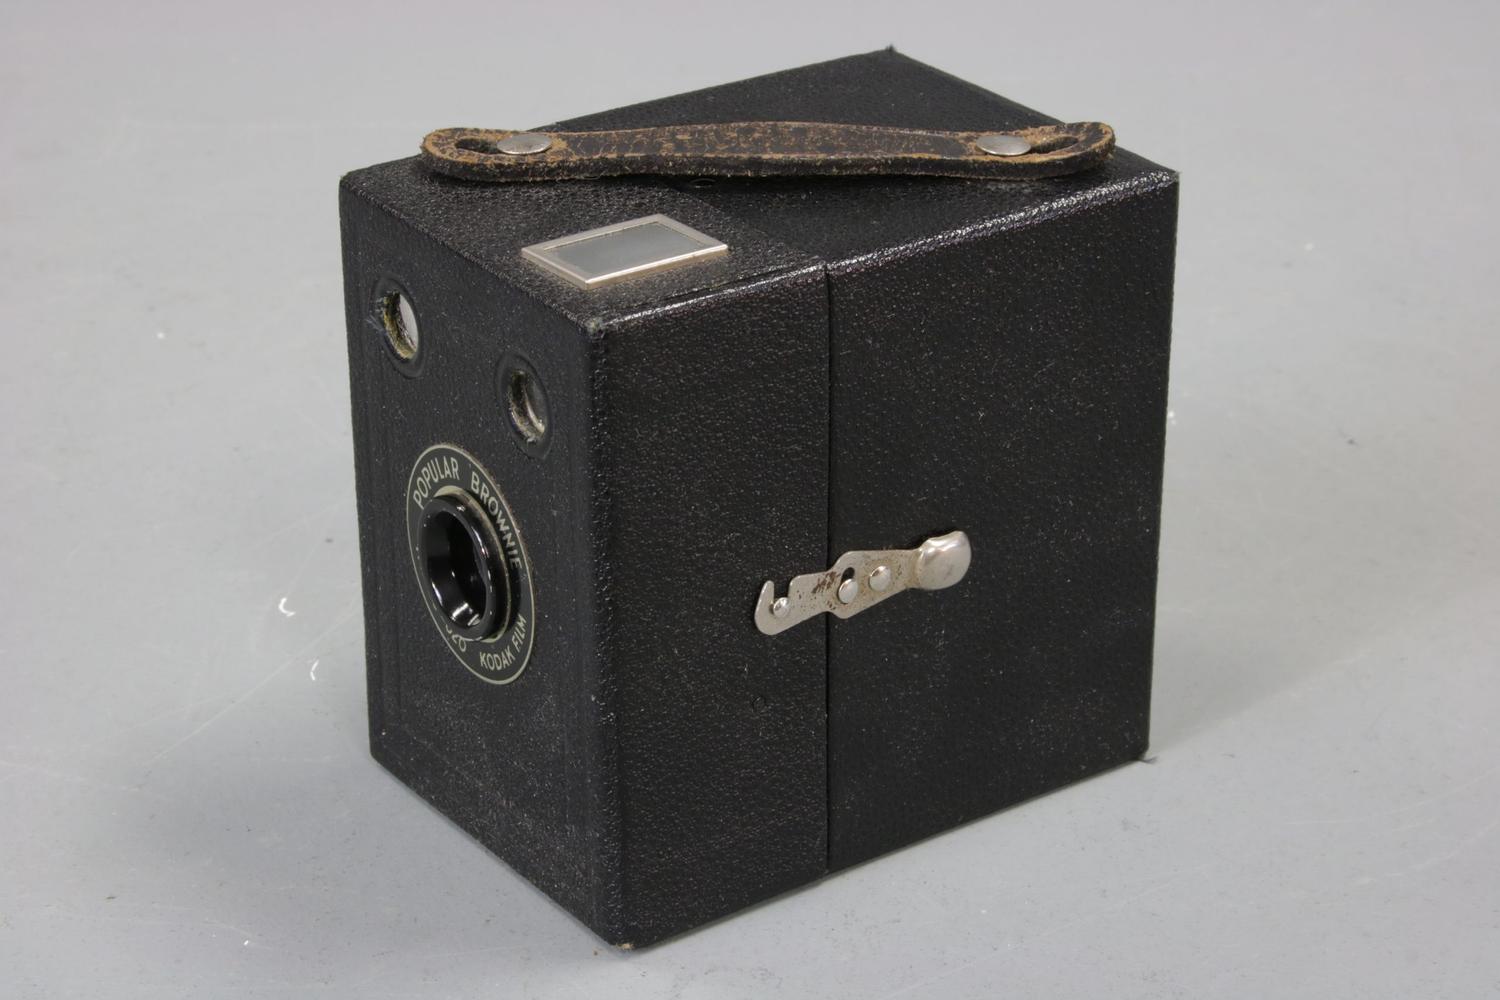 Kodak Six-20 Popular Brownie